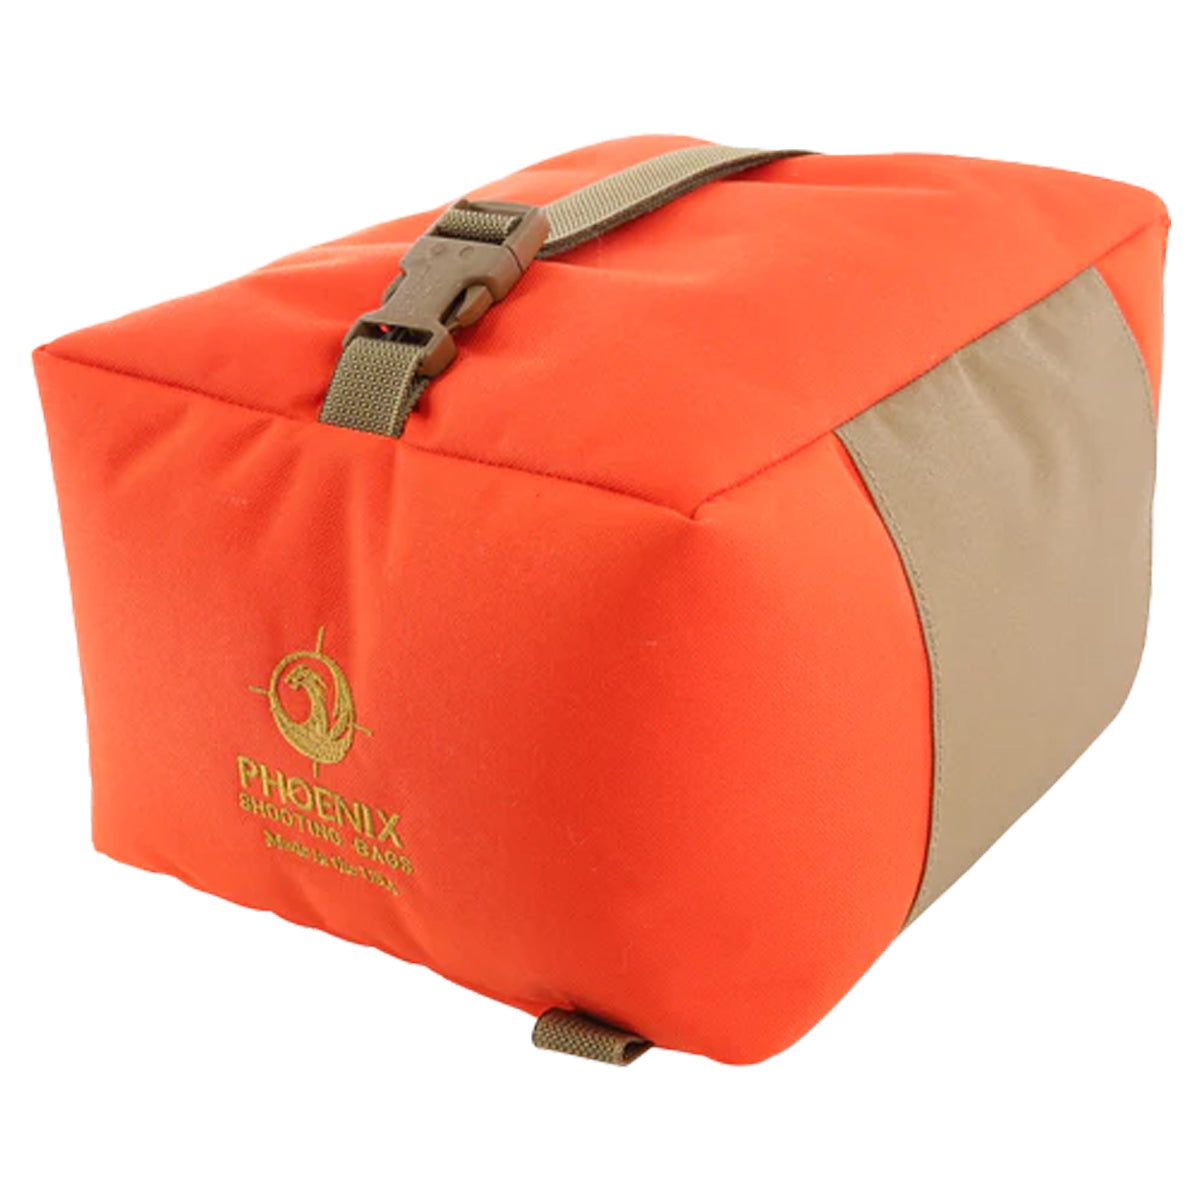 Phoenix Shooting Bags Large Bag (The Ultimate Rest) in Hunter Orange by GOHUNT | Phoenix Shooting Bags - GOHUNT Shop